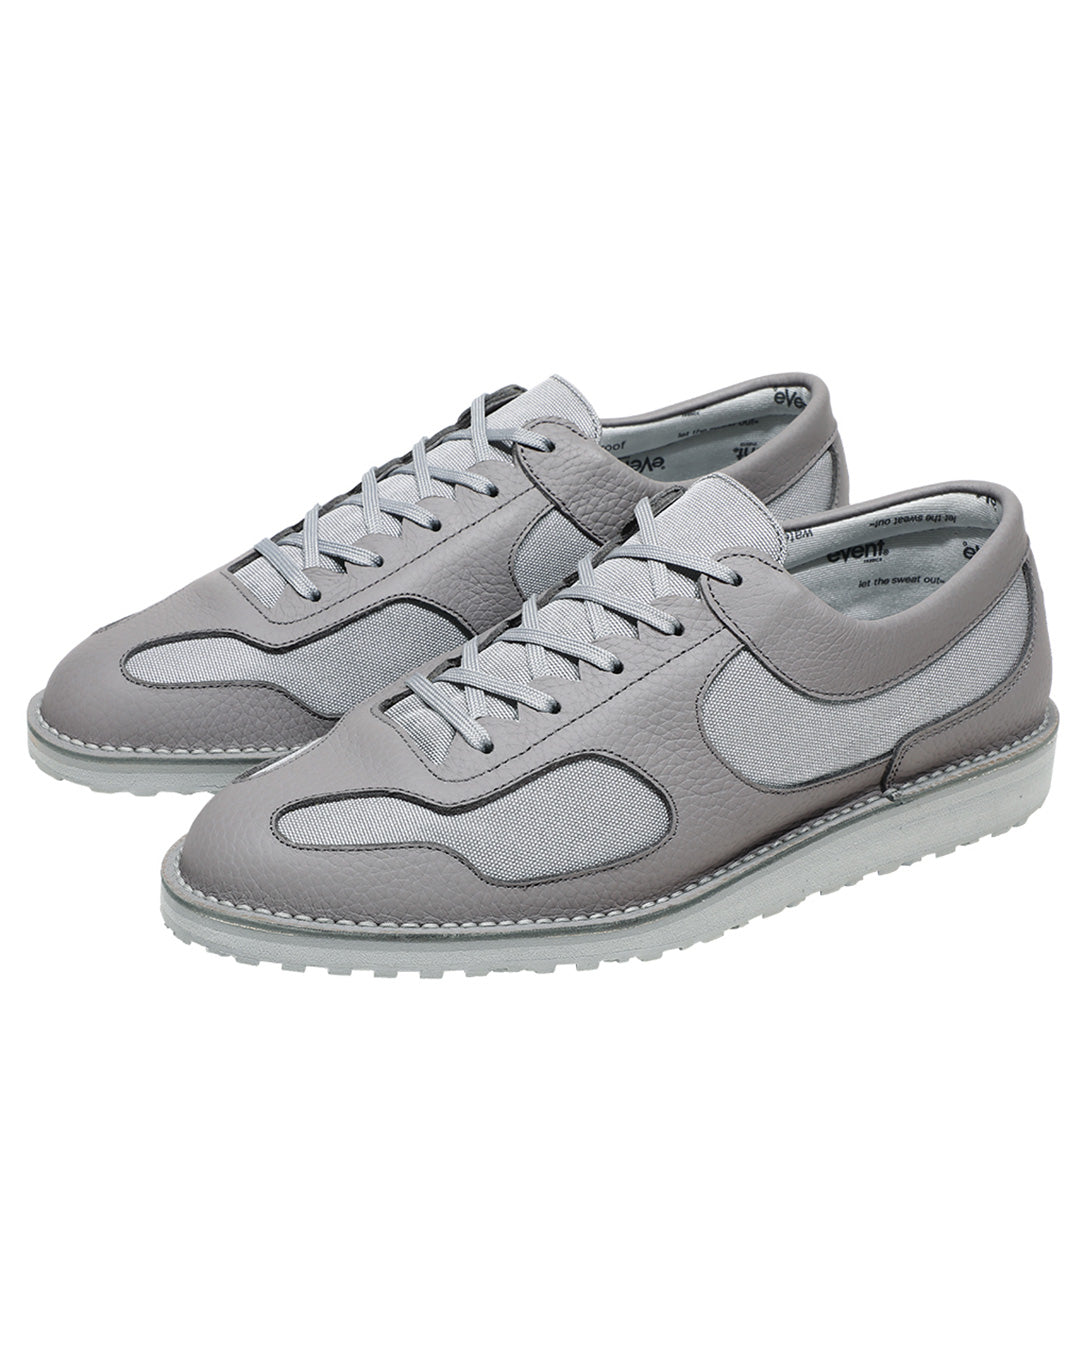 Cav Shoes #1 grey – LOVE nagoya